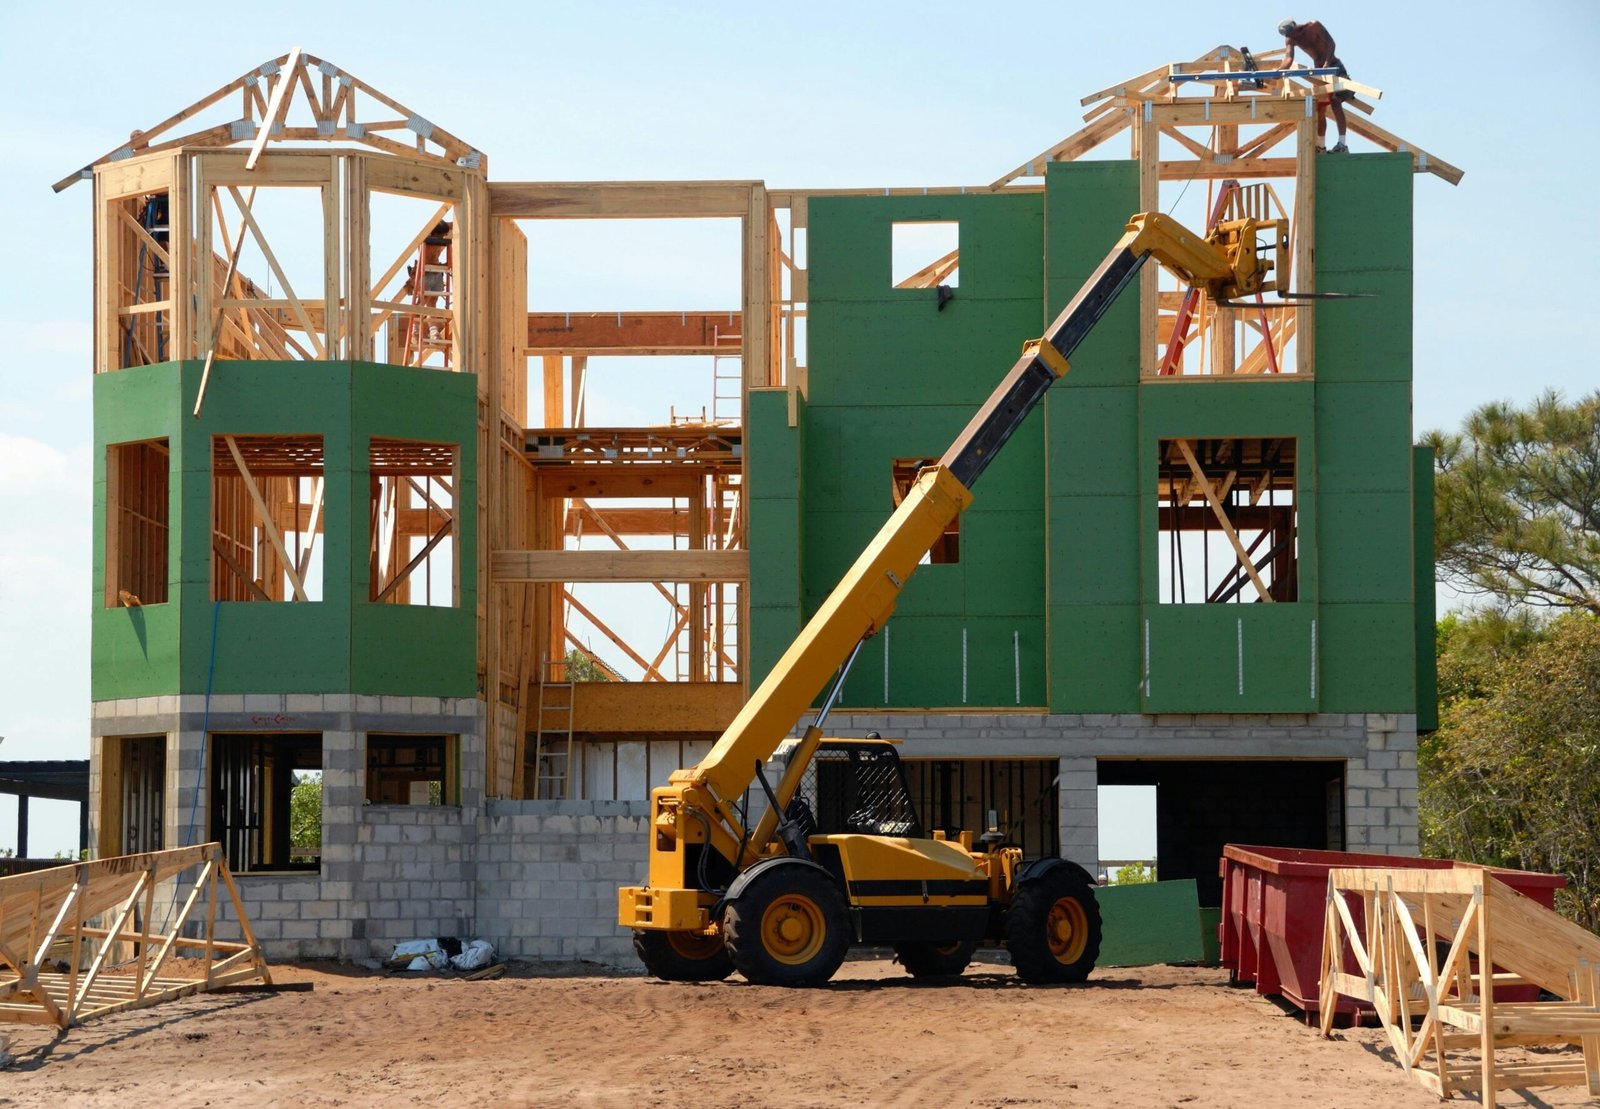 Small biz vs. construction woes? Learn legal tactics for battling cost overruns and delays.